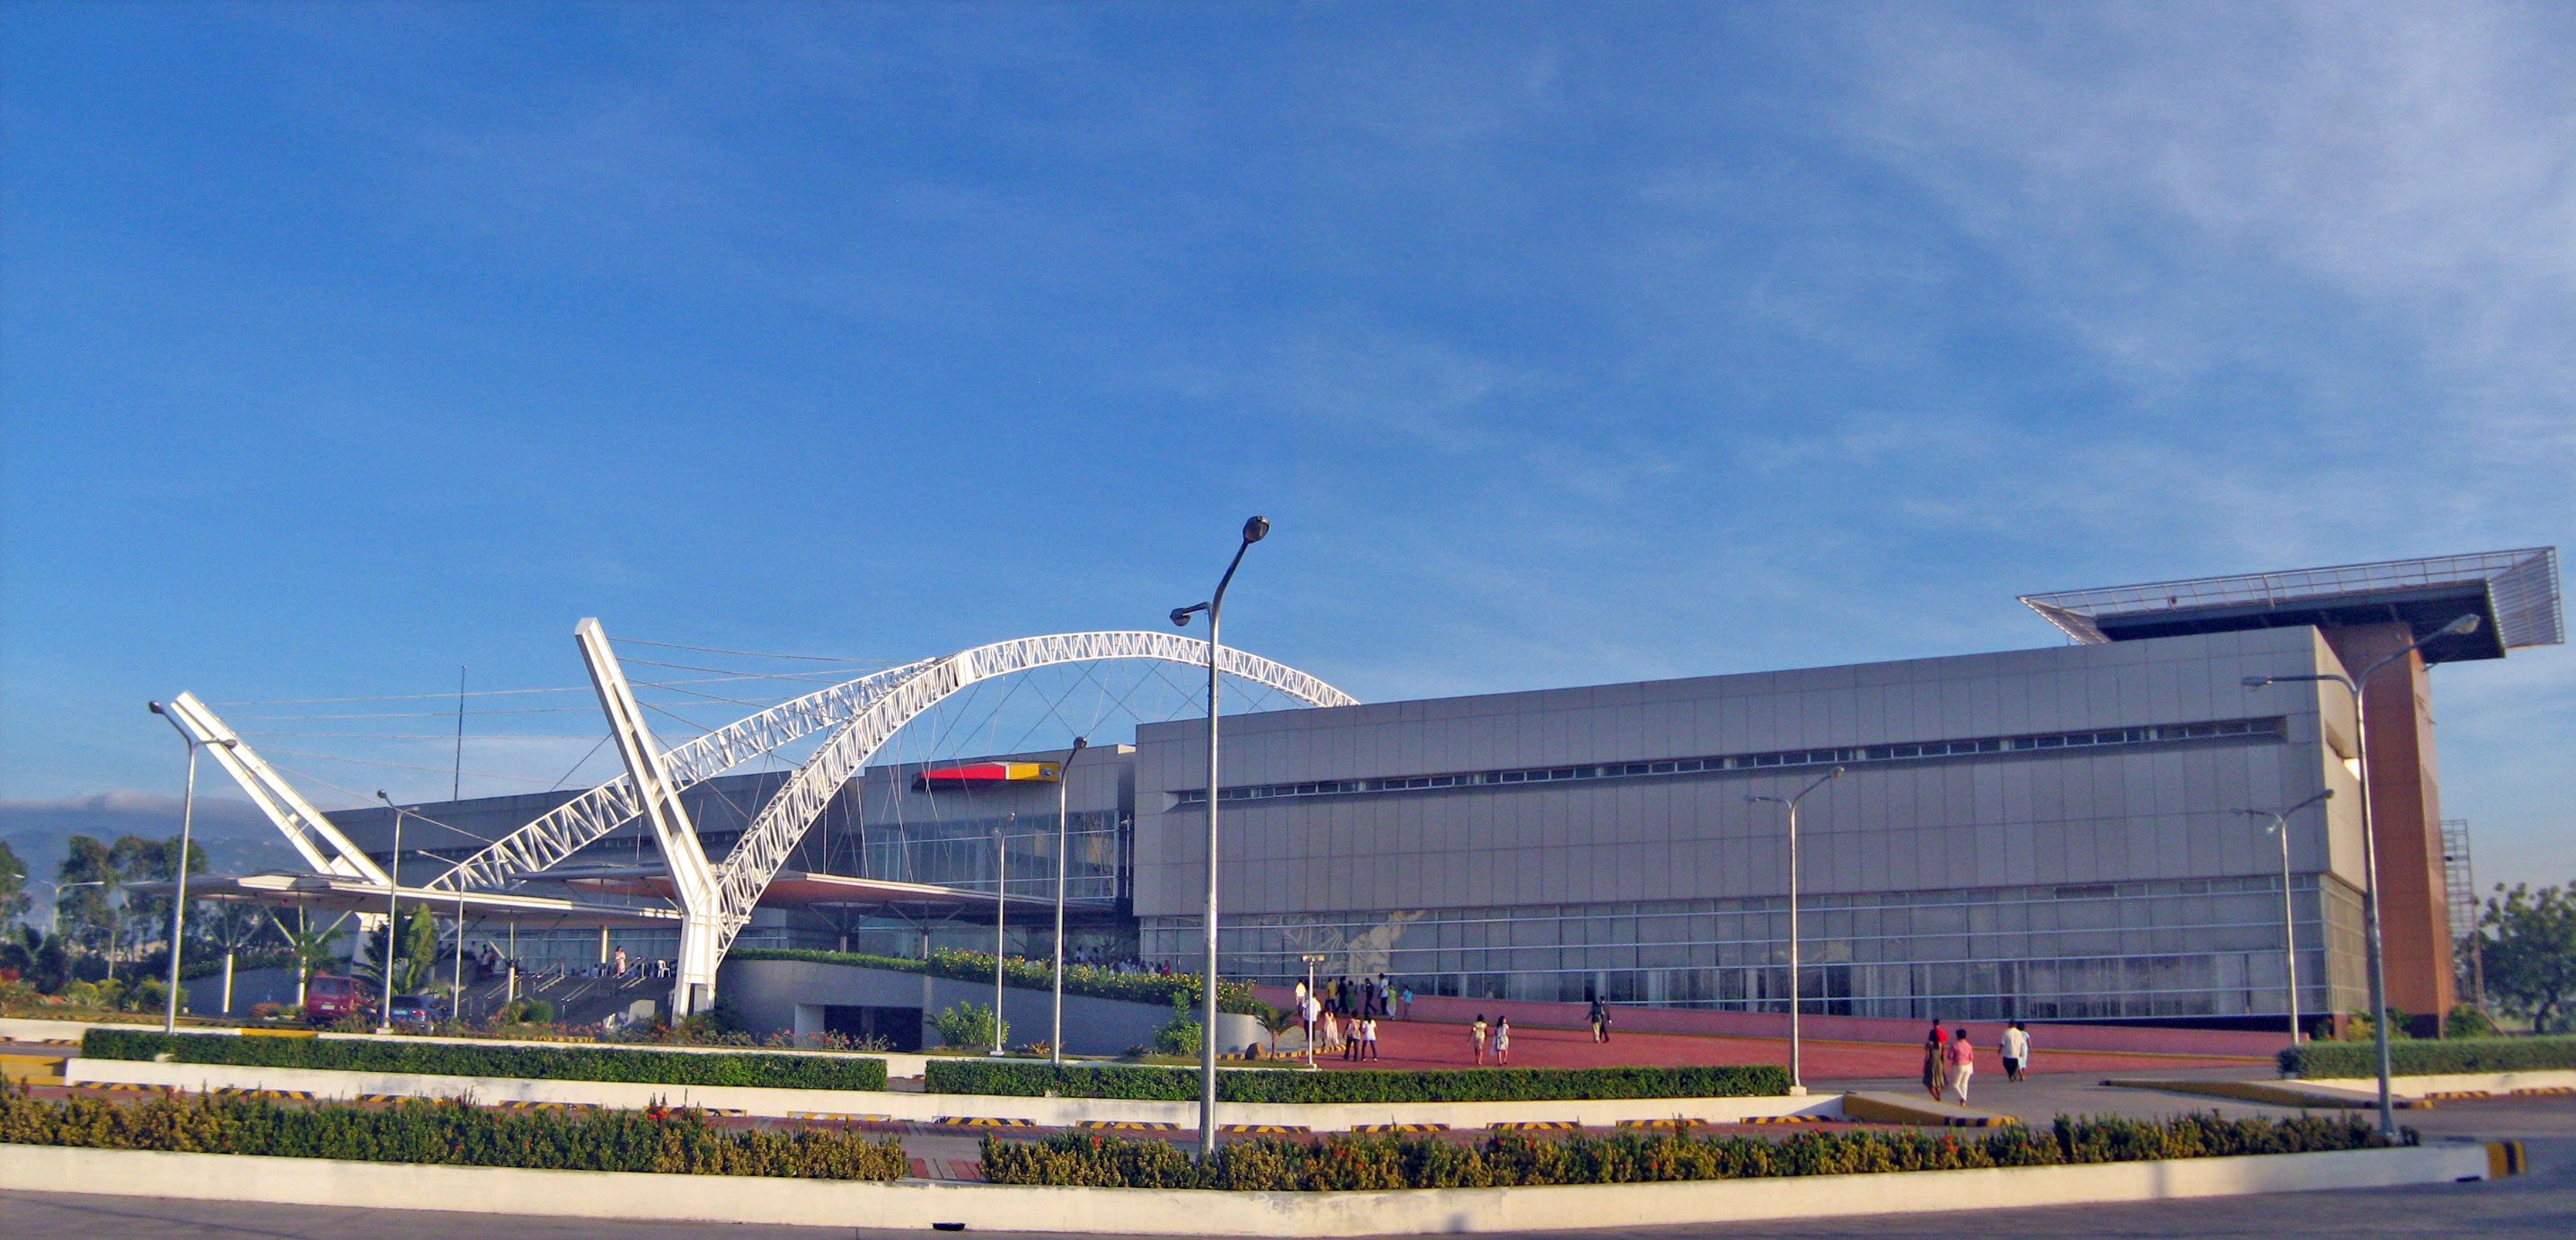 Cebu International Convention Center Image source: Mike Gonzalez/Creative Commons